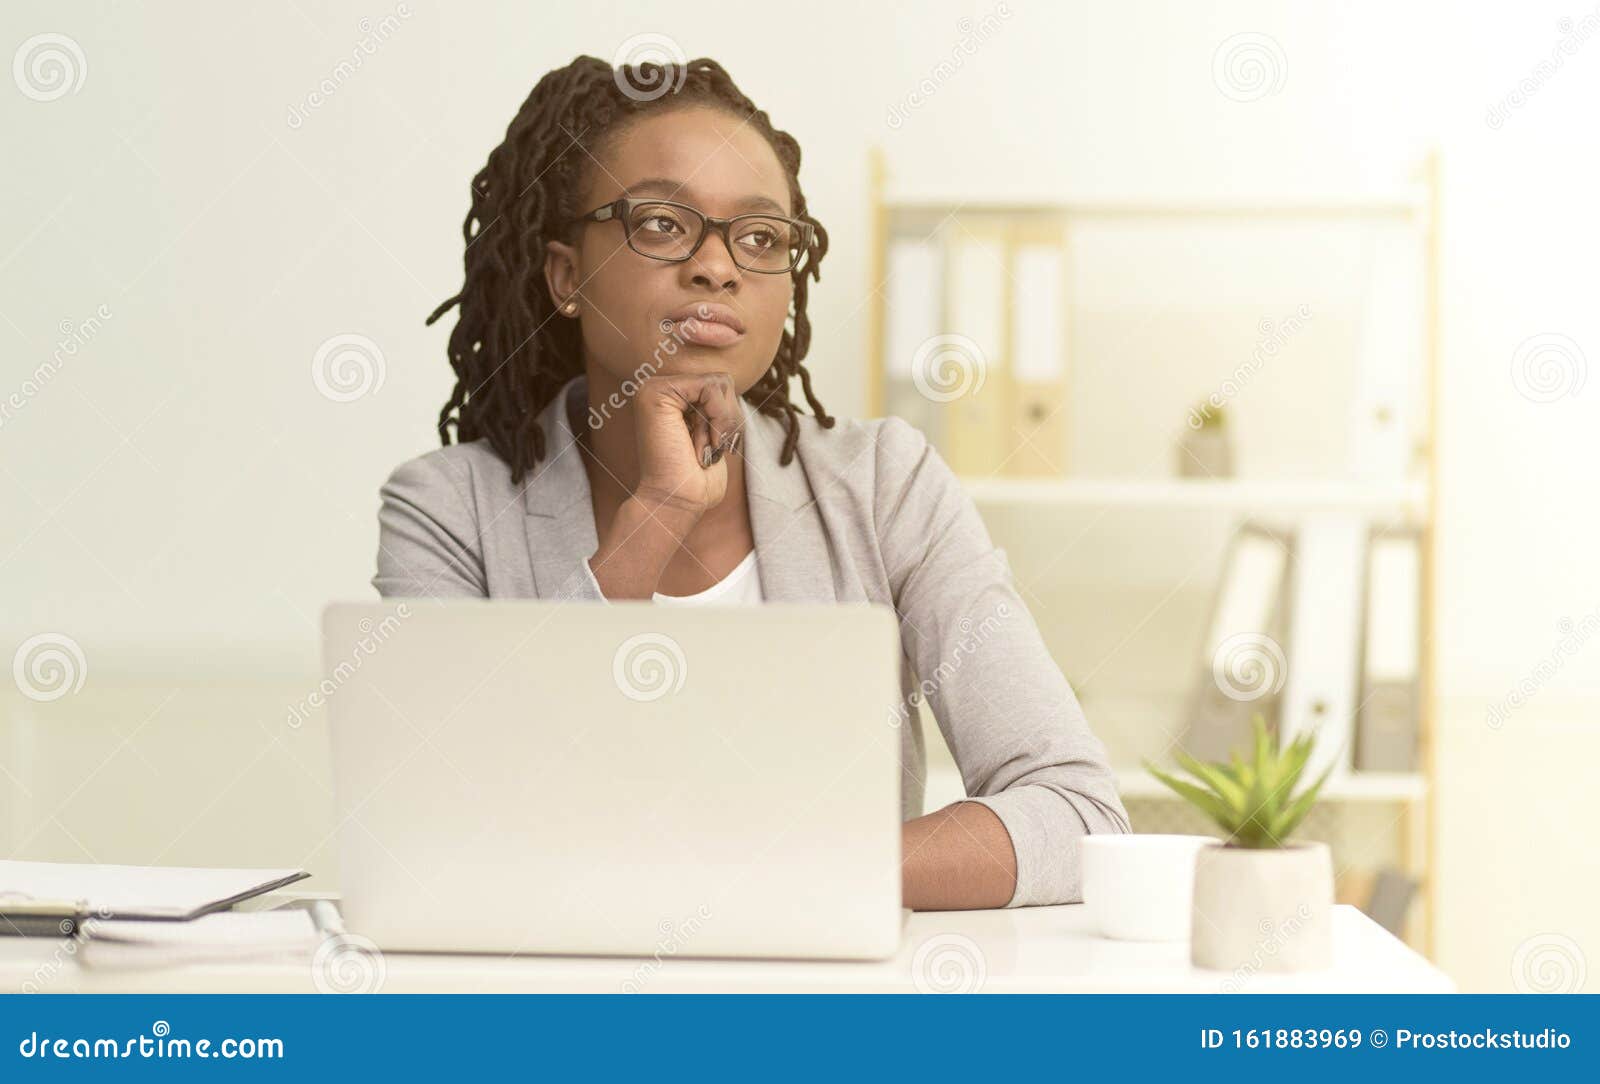 https://thumbs.dreamstime.com/z/busines-planning-pensive-black-entrepreneur-woman-sitting-laptop-touching-chin-office-selective-focus-pensive-black-woman-161883969.jpg